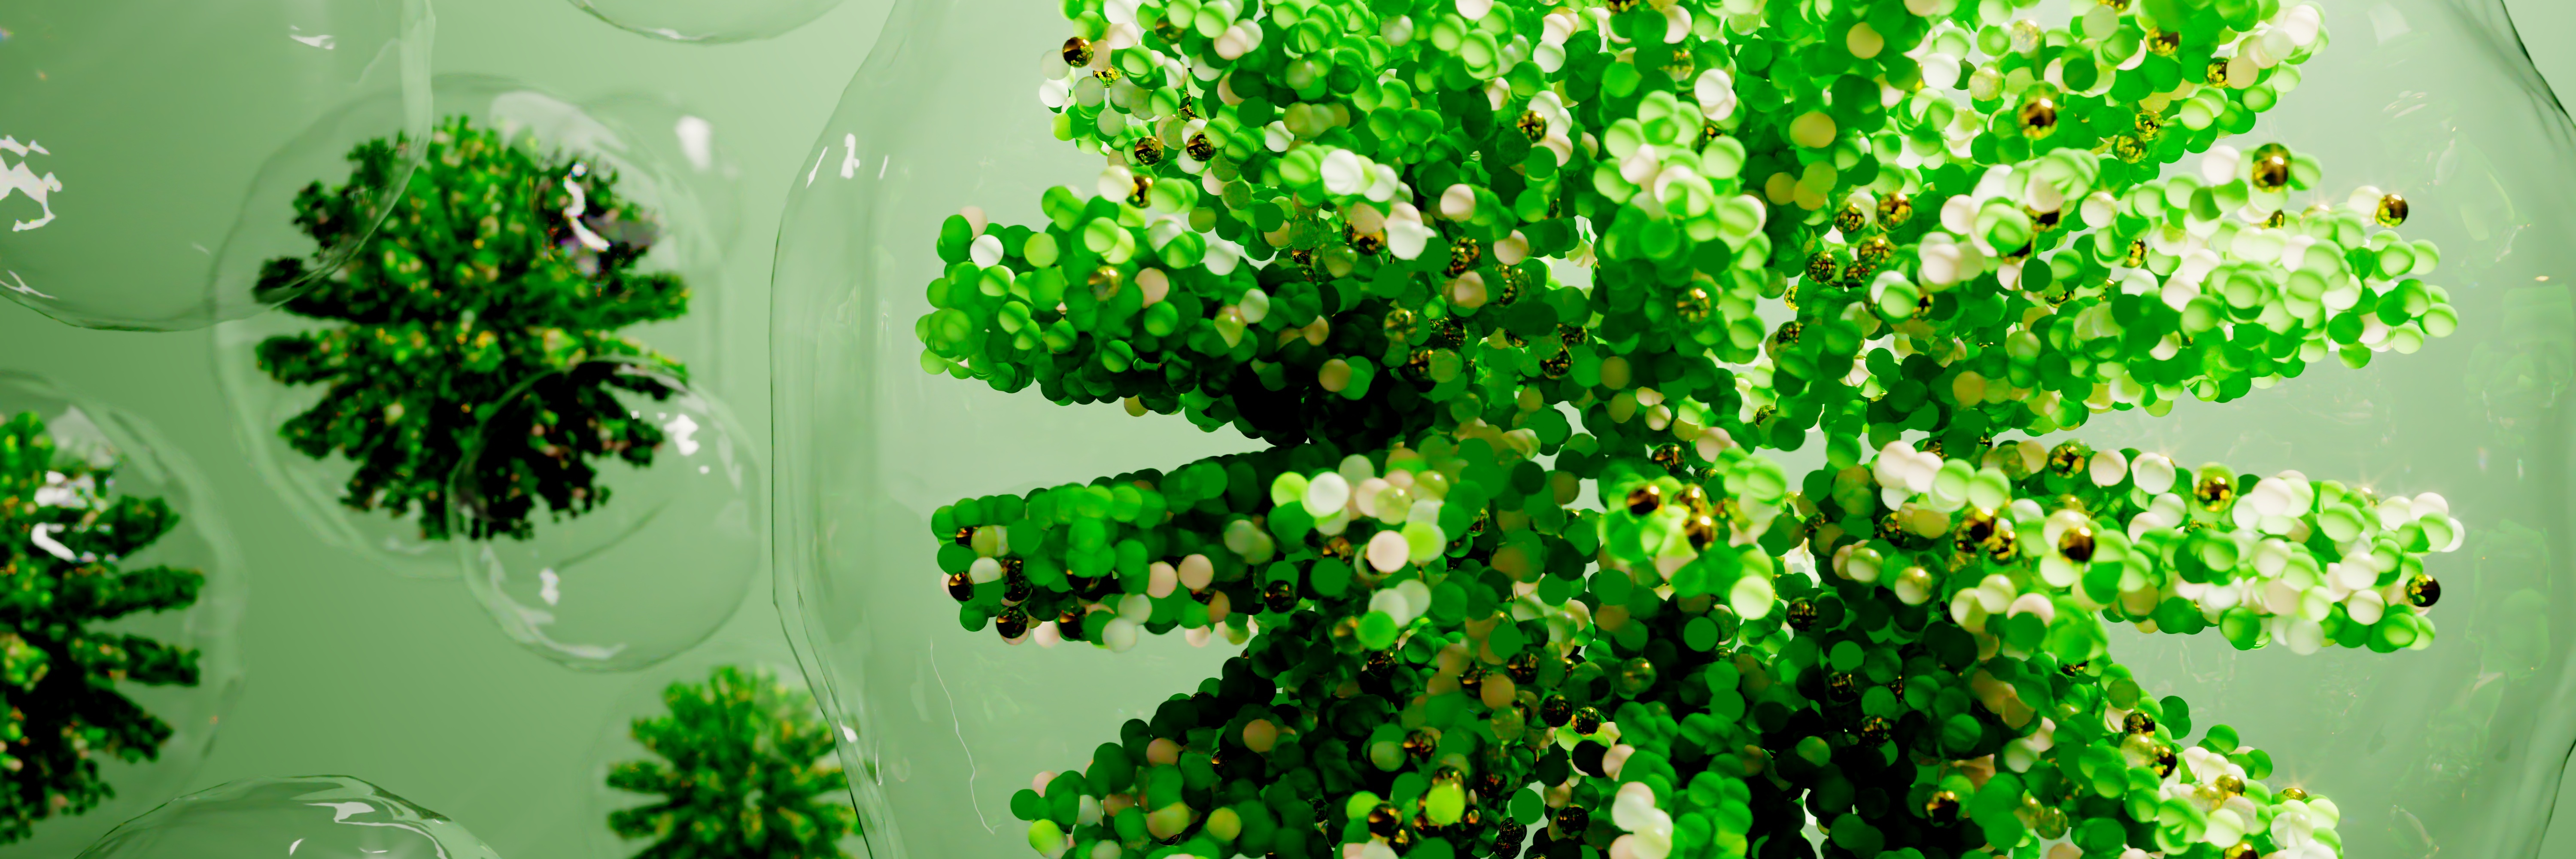 Digital generated image of green drops of liquid or hydrogen molecules inside transparent spheres.